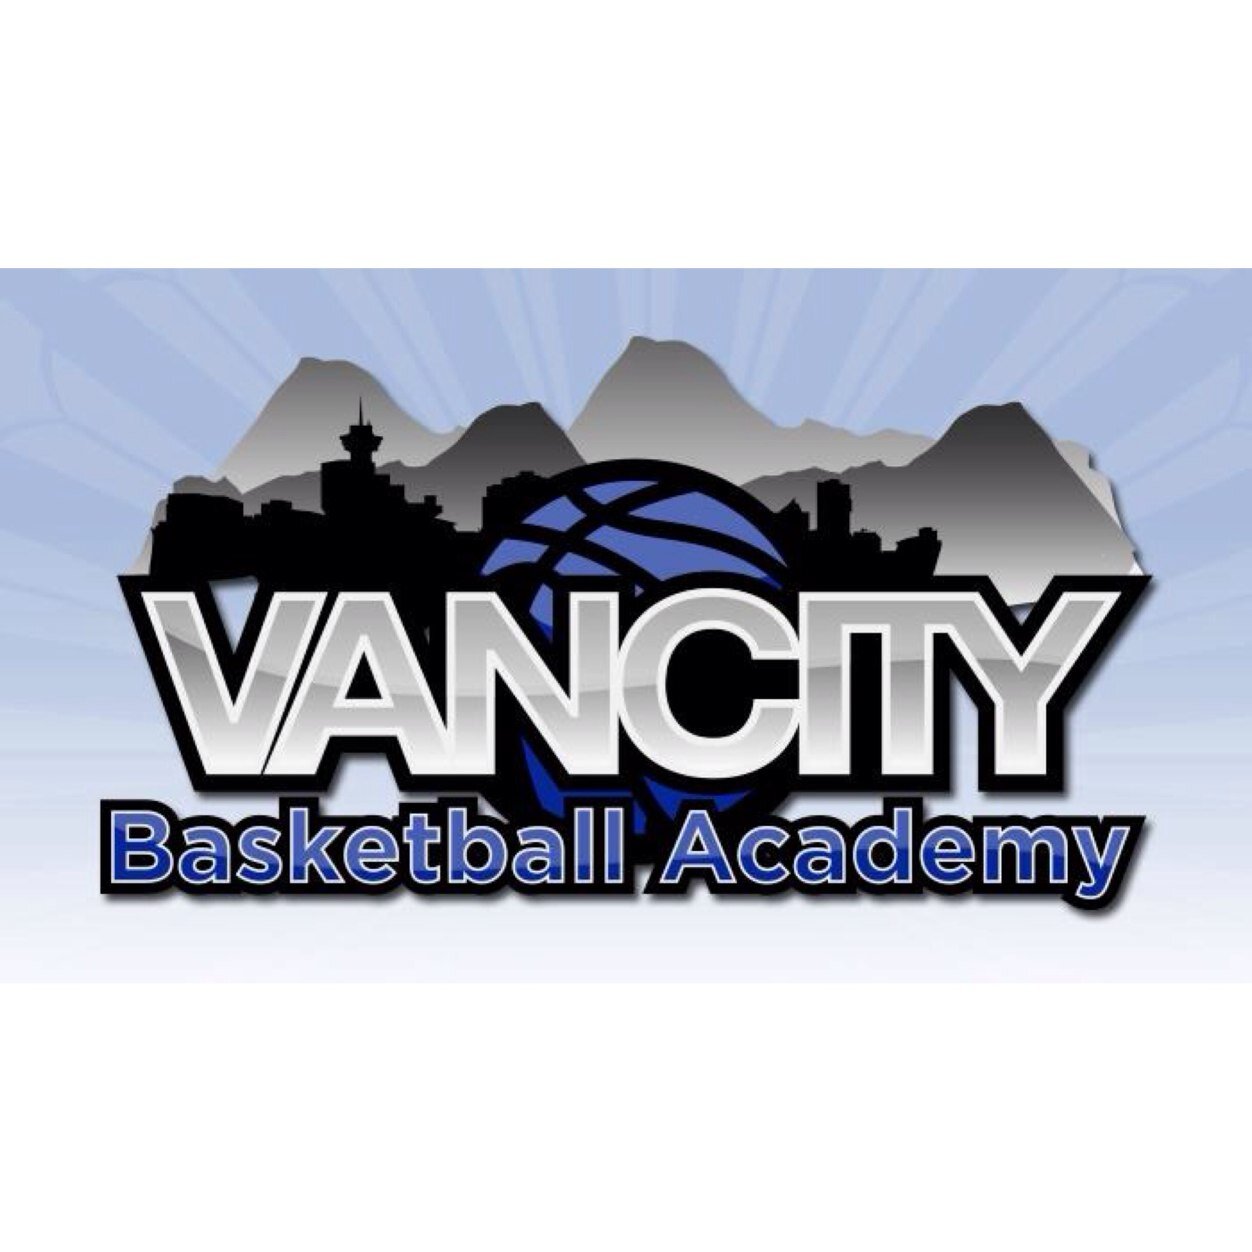 Vancouver's Premier Basketball Academy.